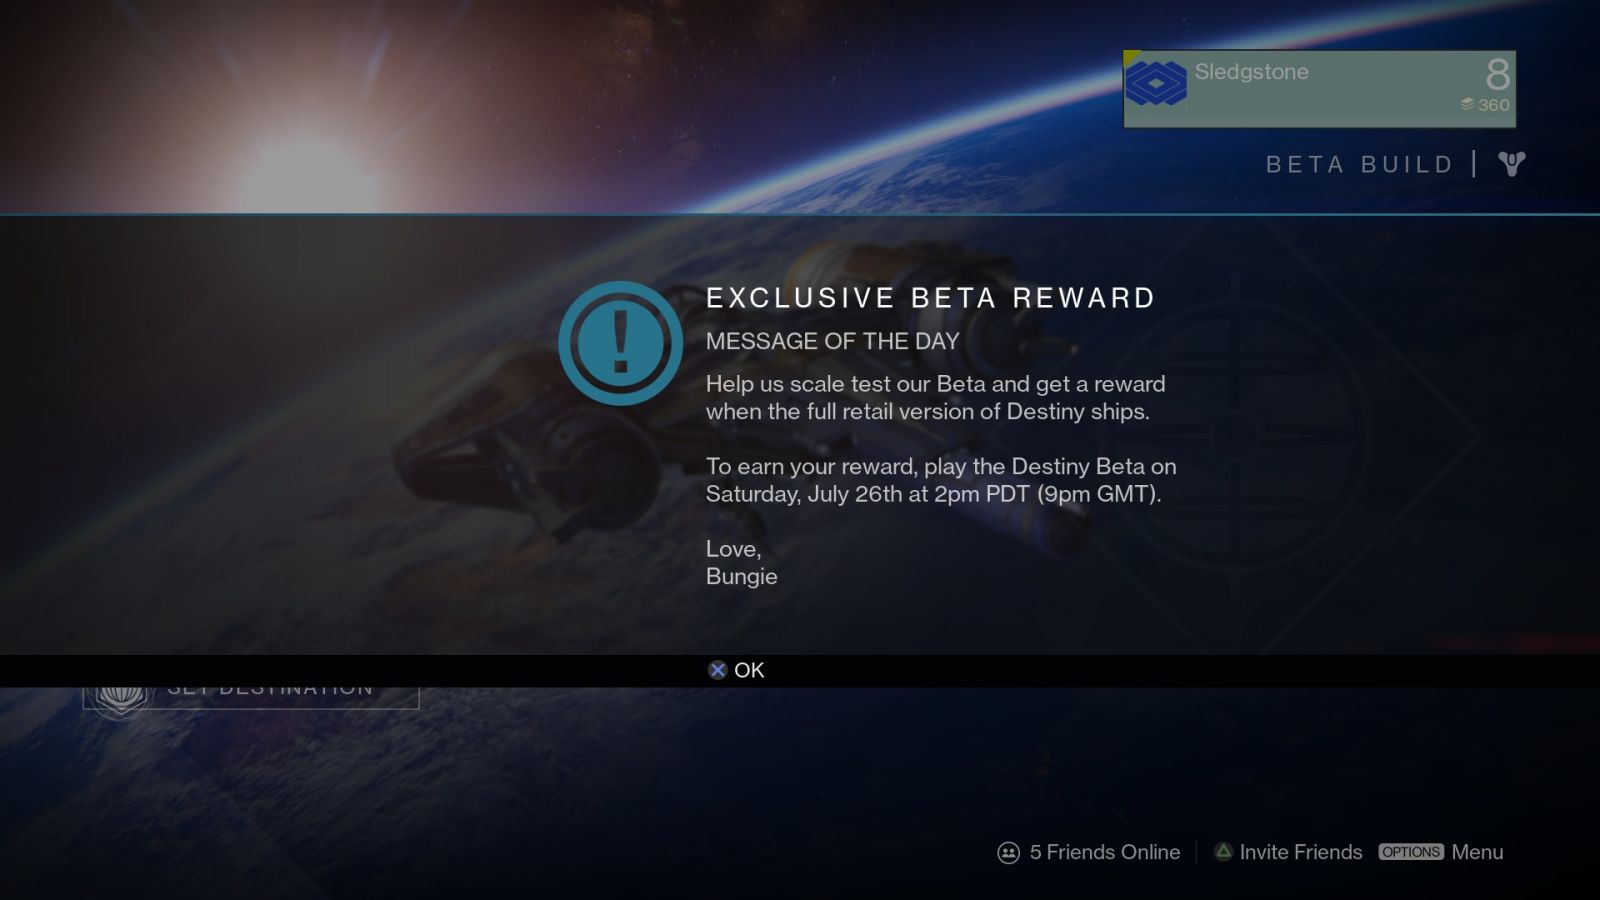 Destiny Beta Reward Announcement